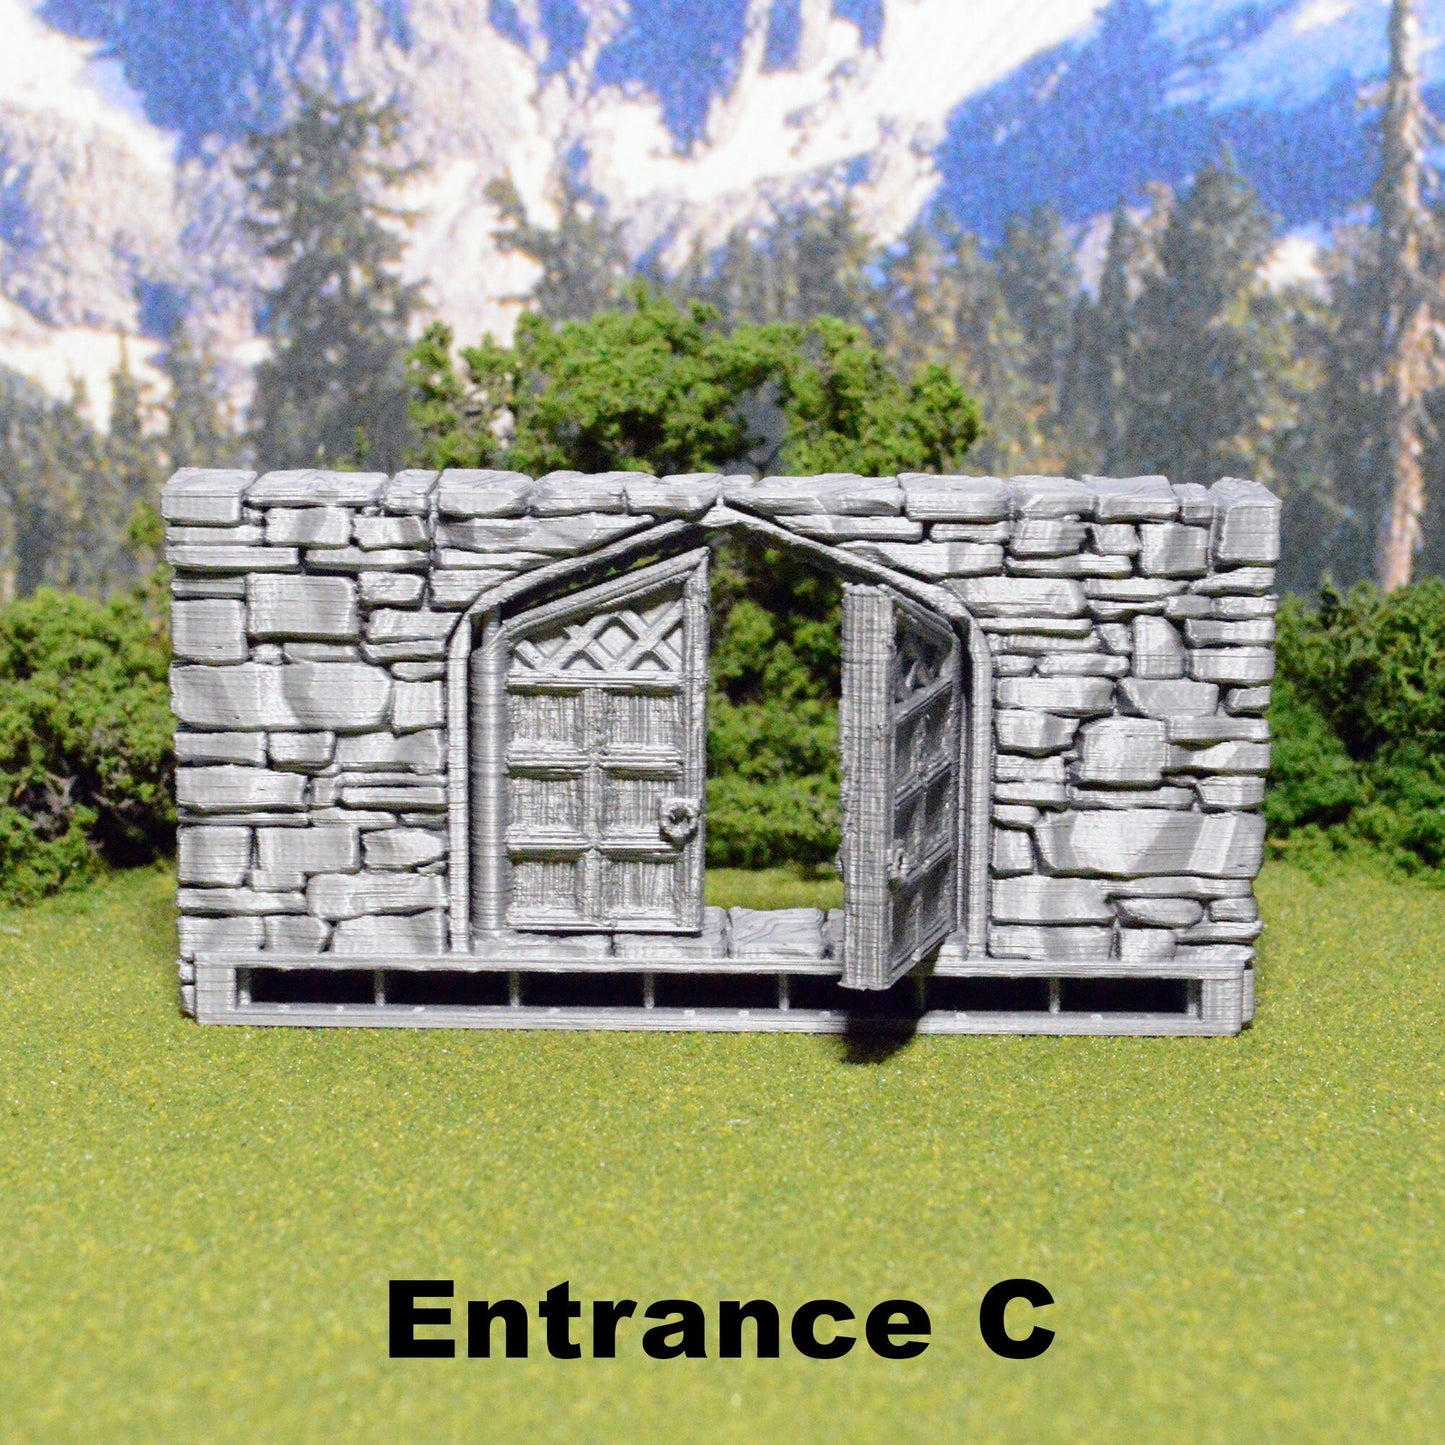 Schist Entrance Door Tiles 28mm for D&D Terrain, Modular OpenLOCK Building Tiles, DnD Medieval Village Stone Wall Tiles